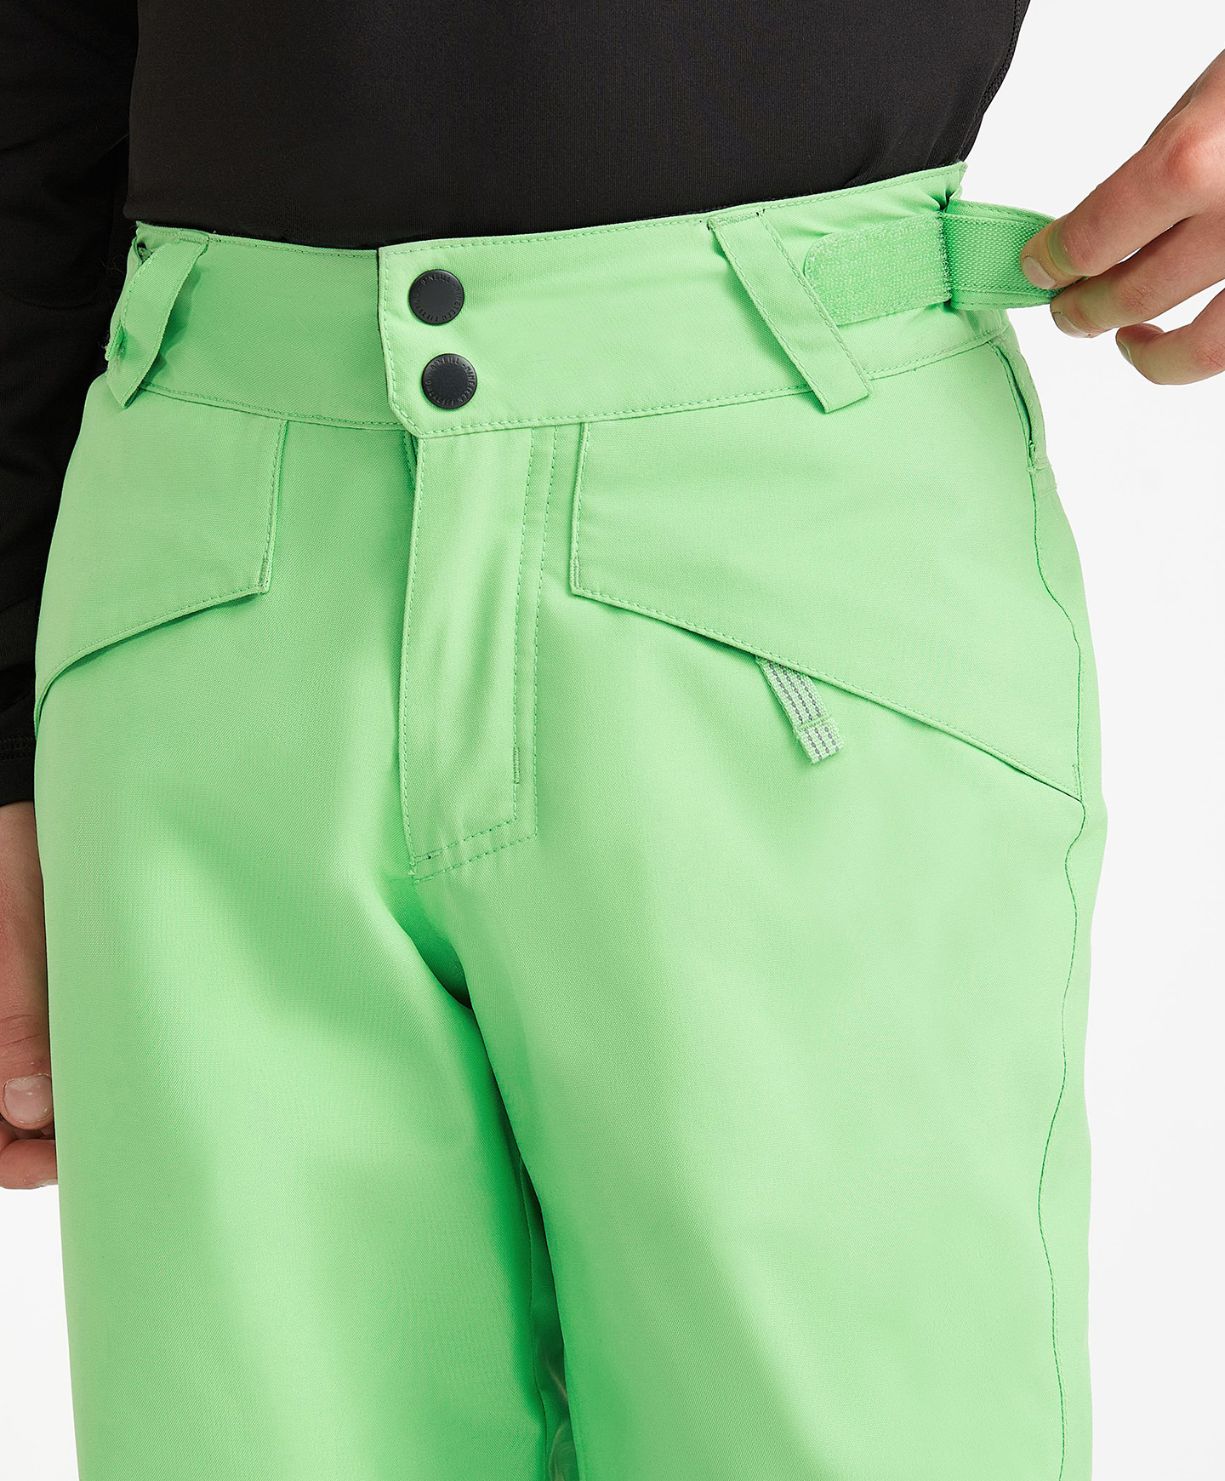 Boy's Hammer Snow Pants - Luminous Green